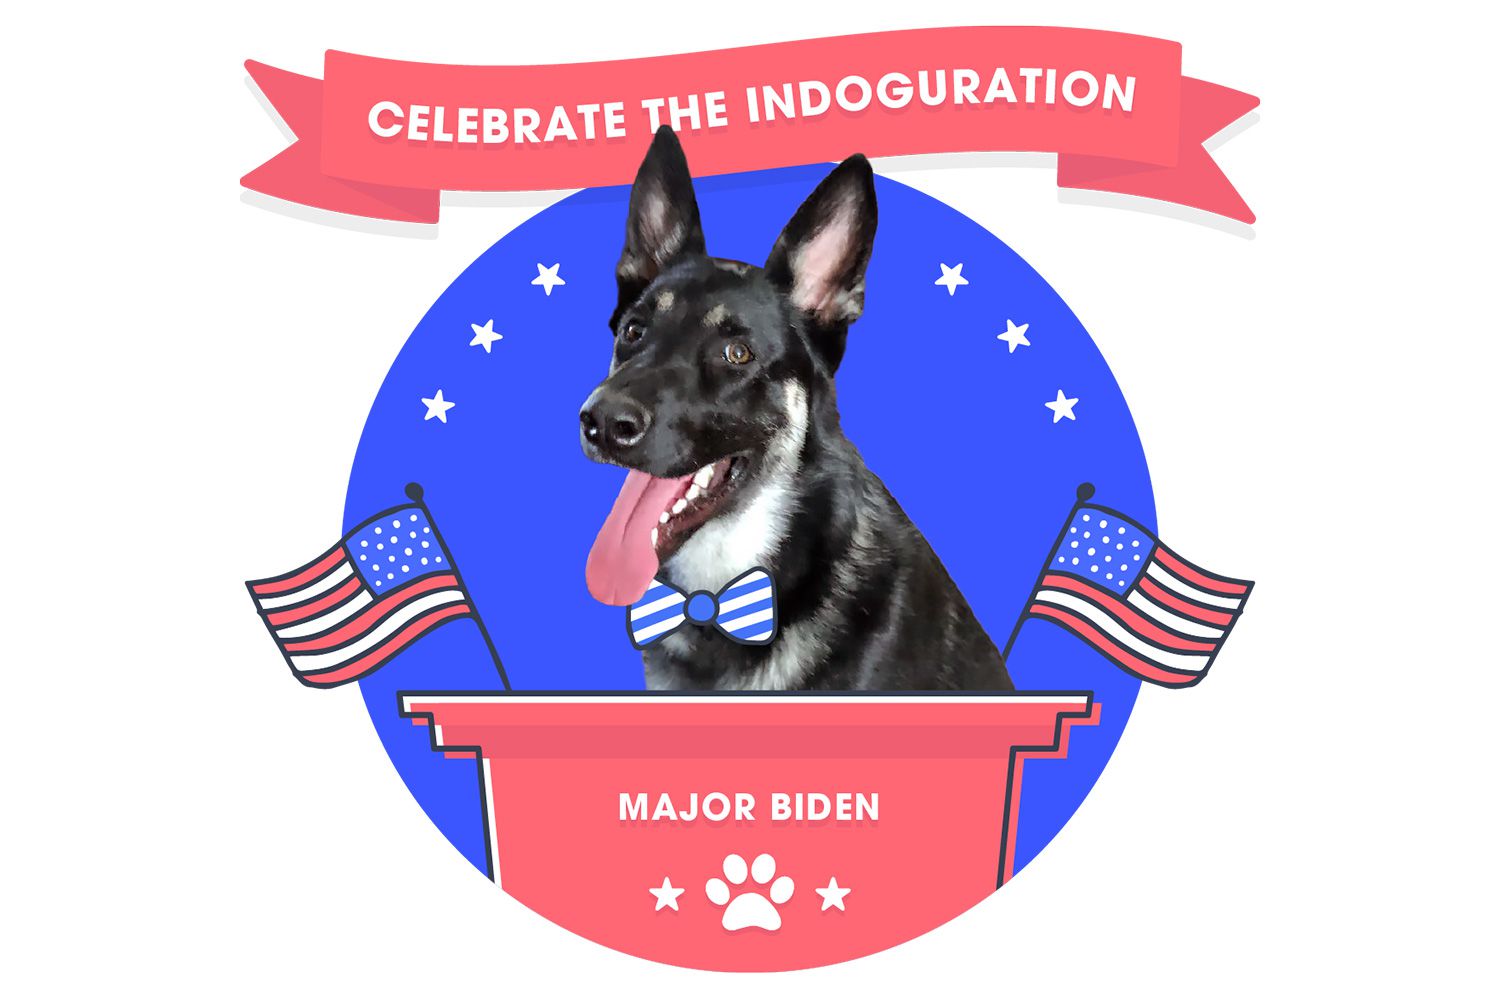 Major Biden the dog indoguration